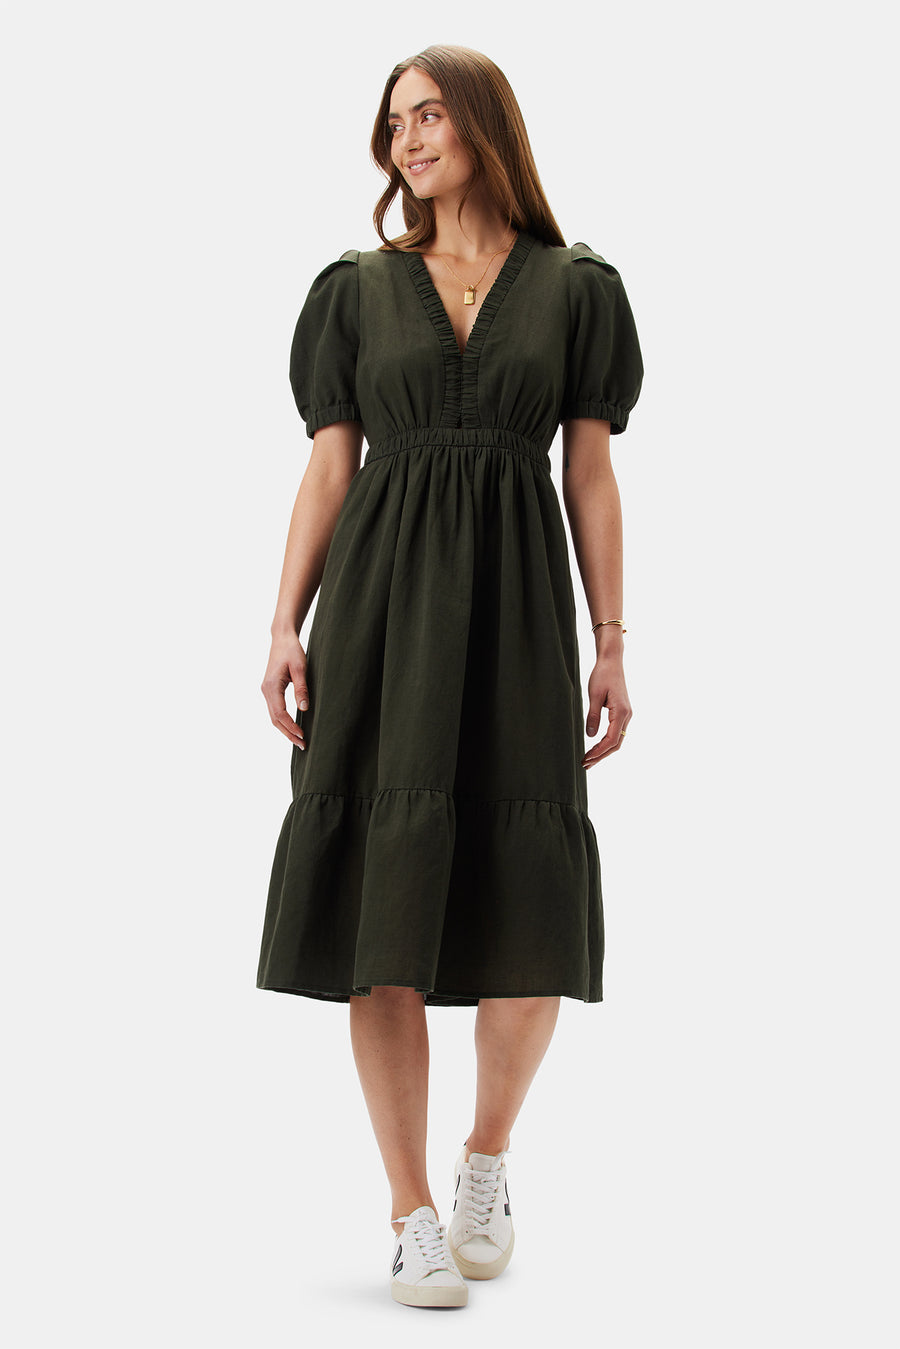 Danielle Cotton Linen Dress - Olive Green